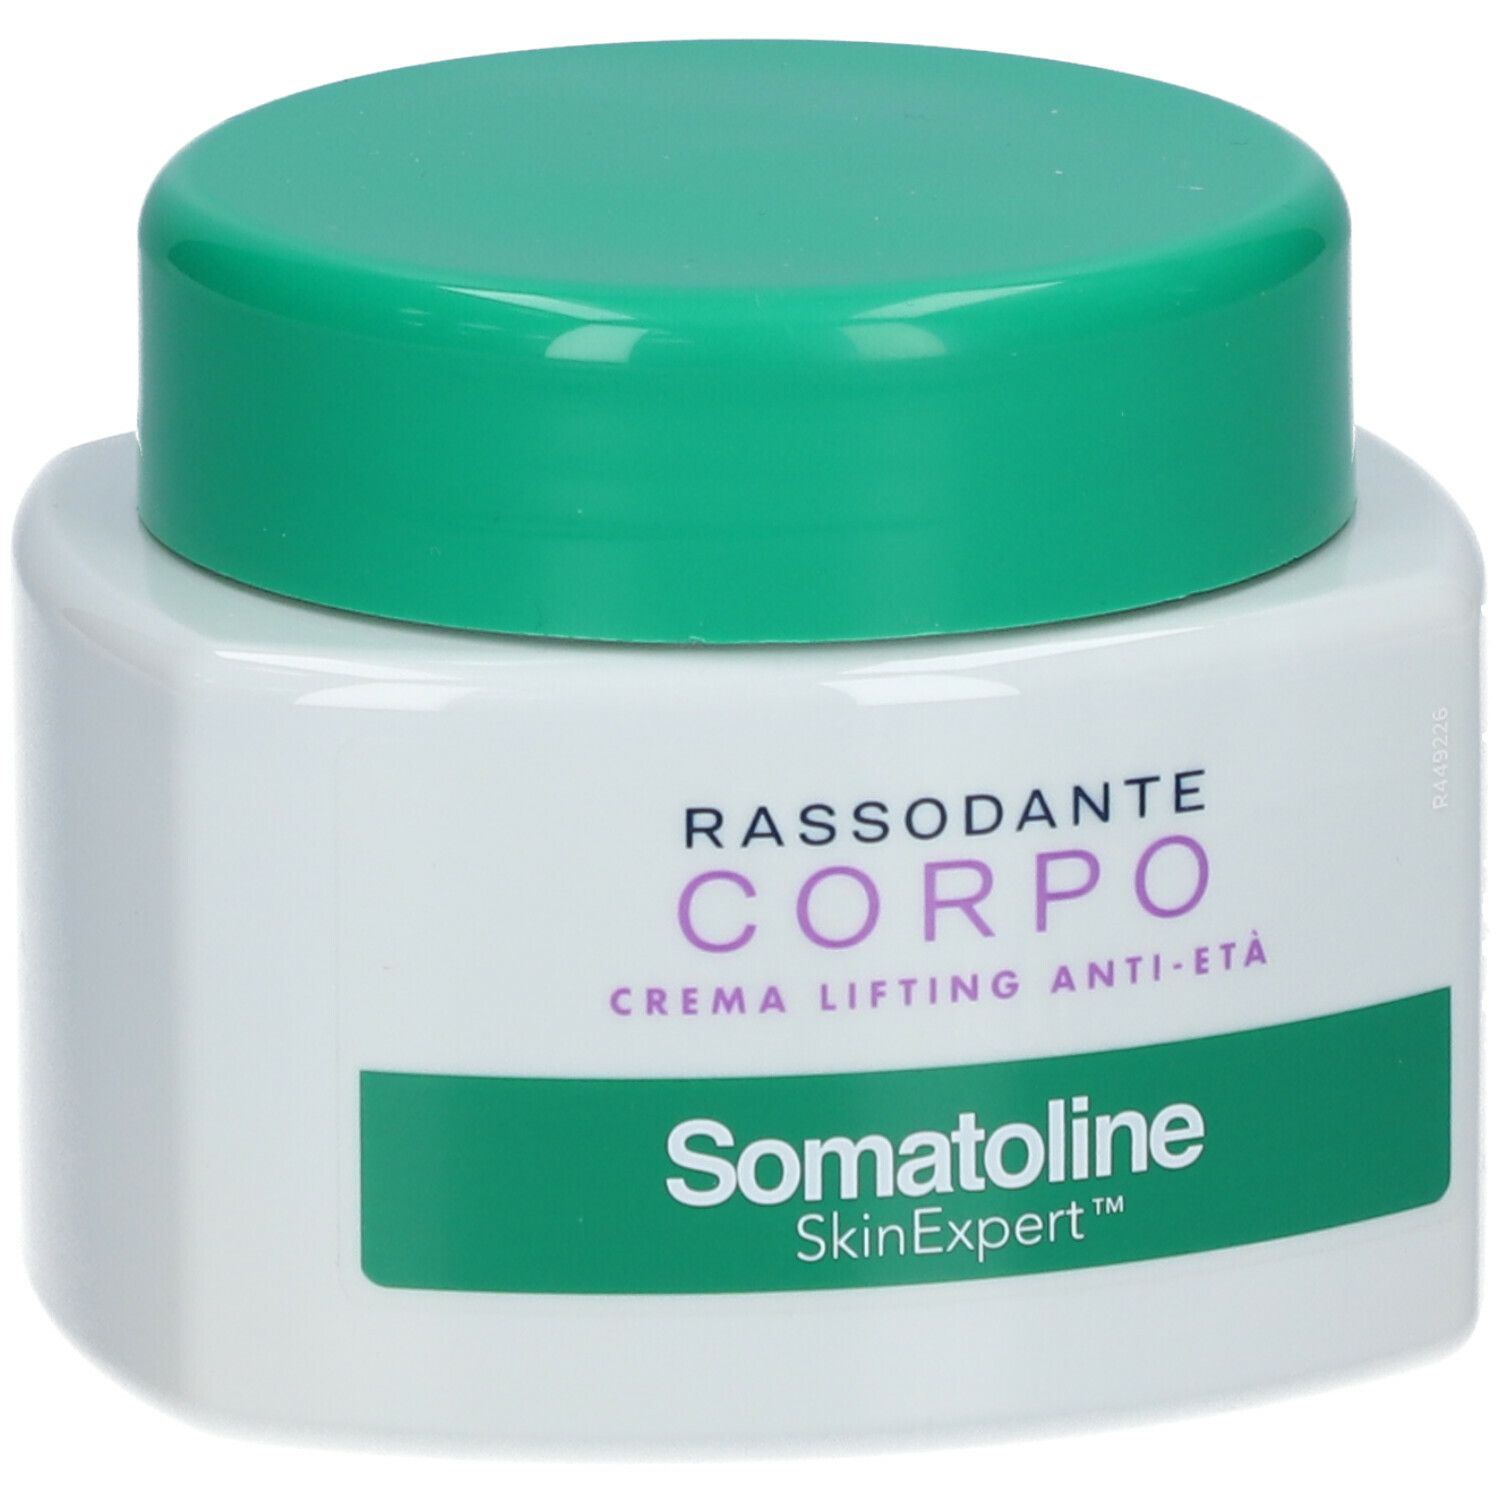 Somatoline Cosmetic® Anti-Age Lift Effect Rassodante Over 50